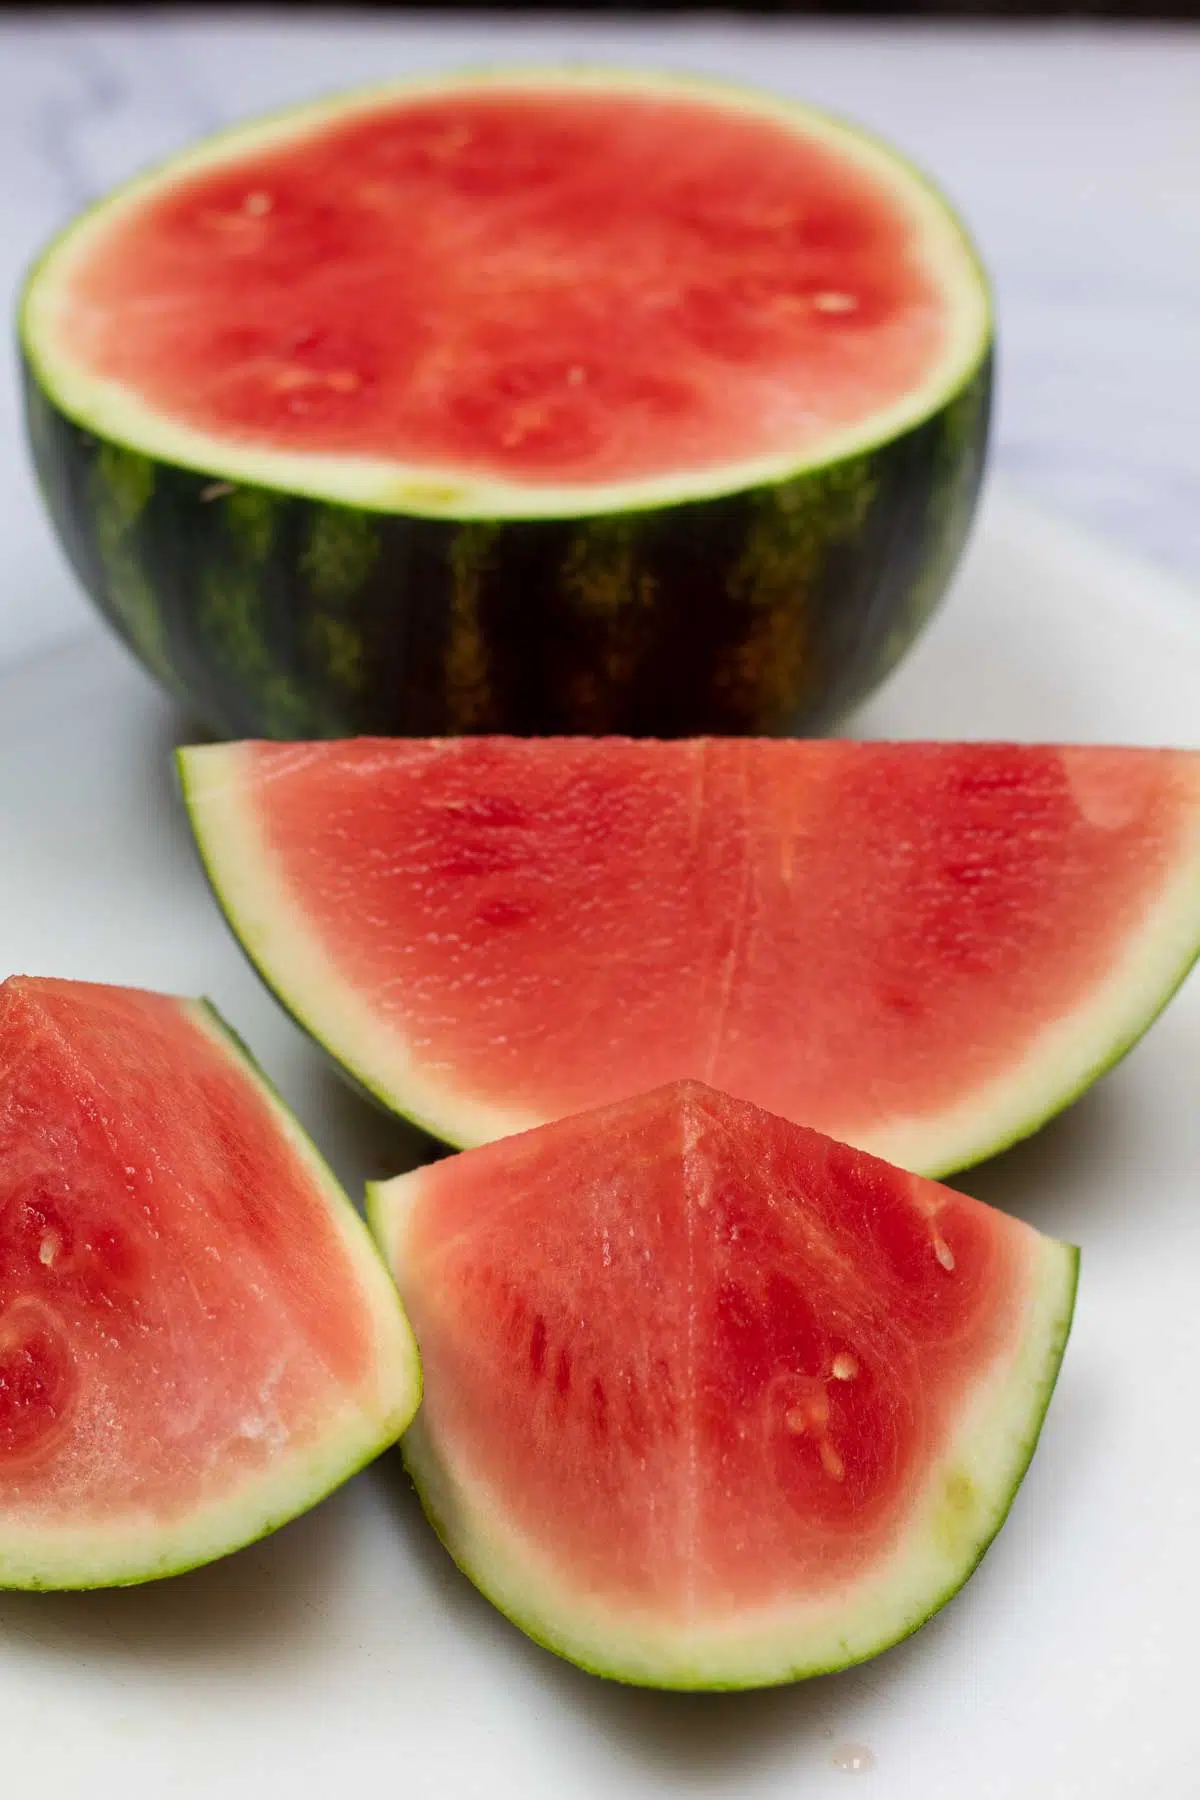 Dehydrated watermelon jerky ingredients image with sliced watermelon, no optional ingredients like salt, sugar, Tajin, or mint shown.